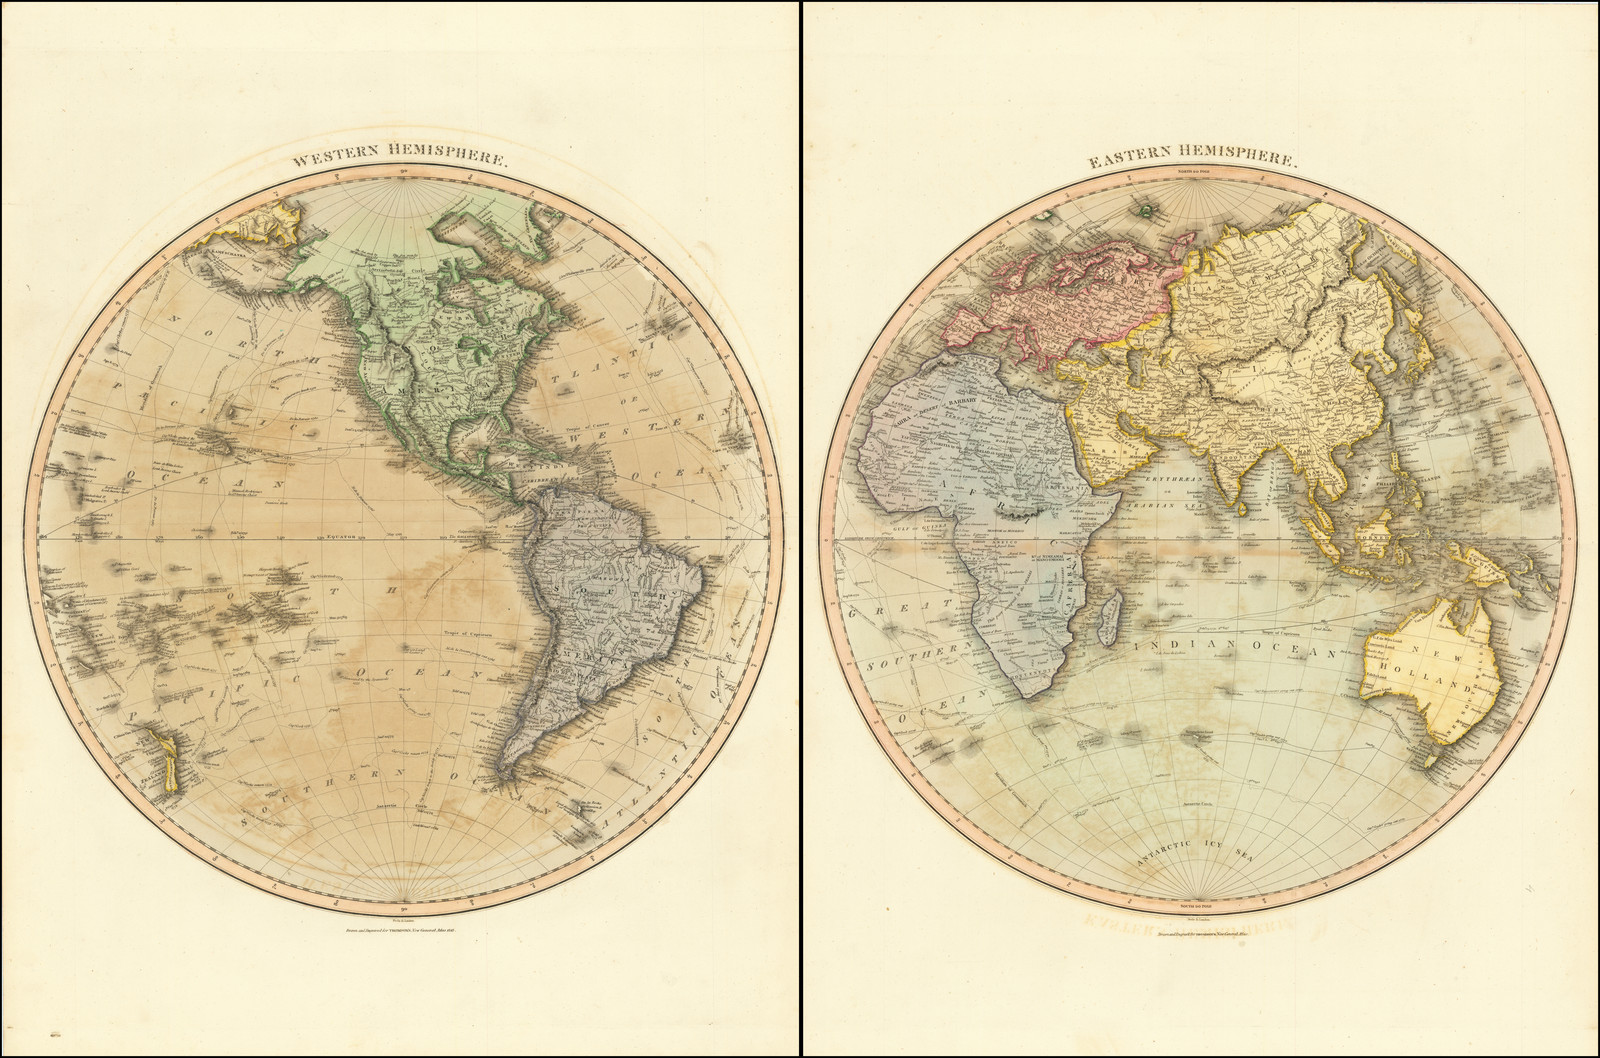 western and eastern hemisphere map